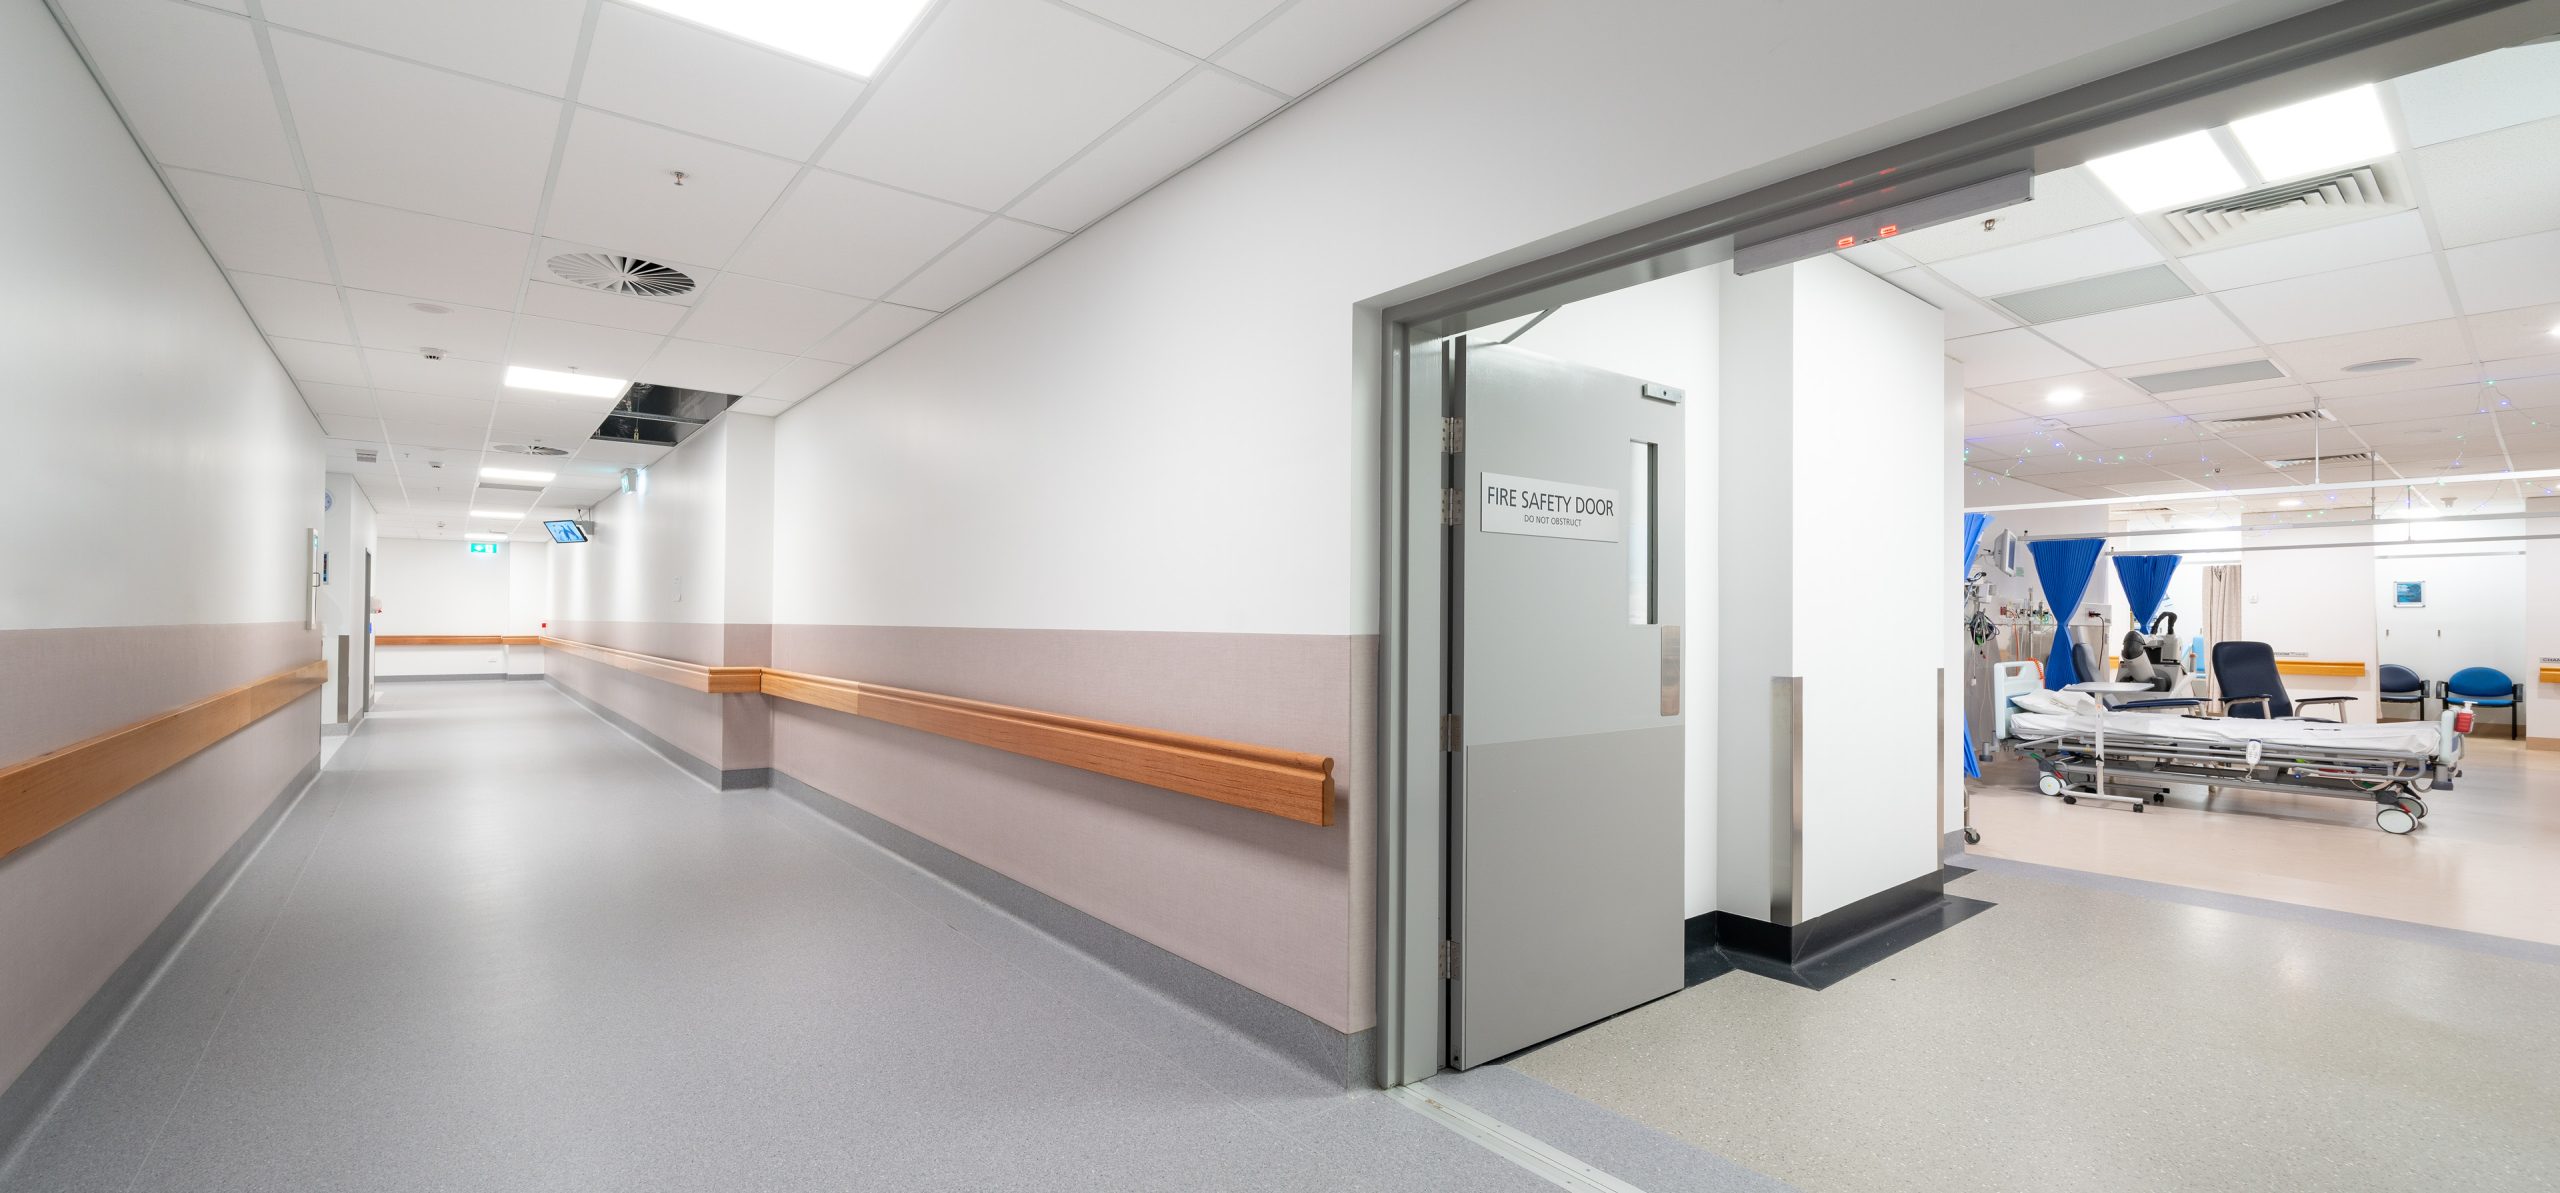 6 corridor and beds bathurst hospital mri imaging department extension taylor construction health